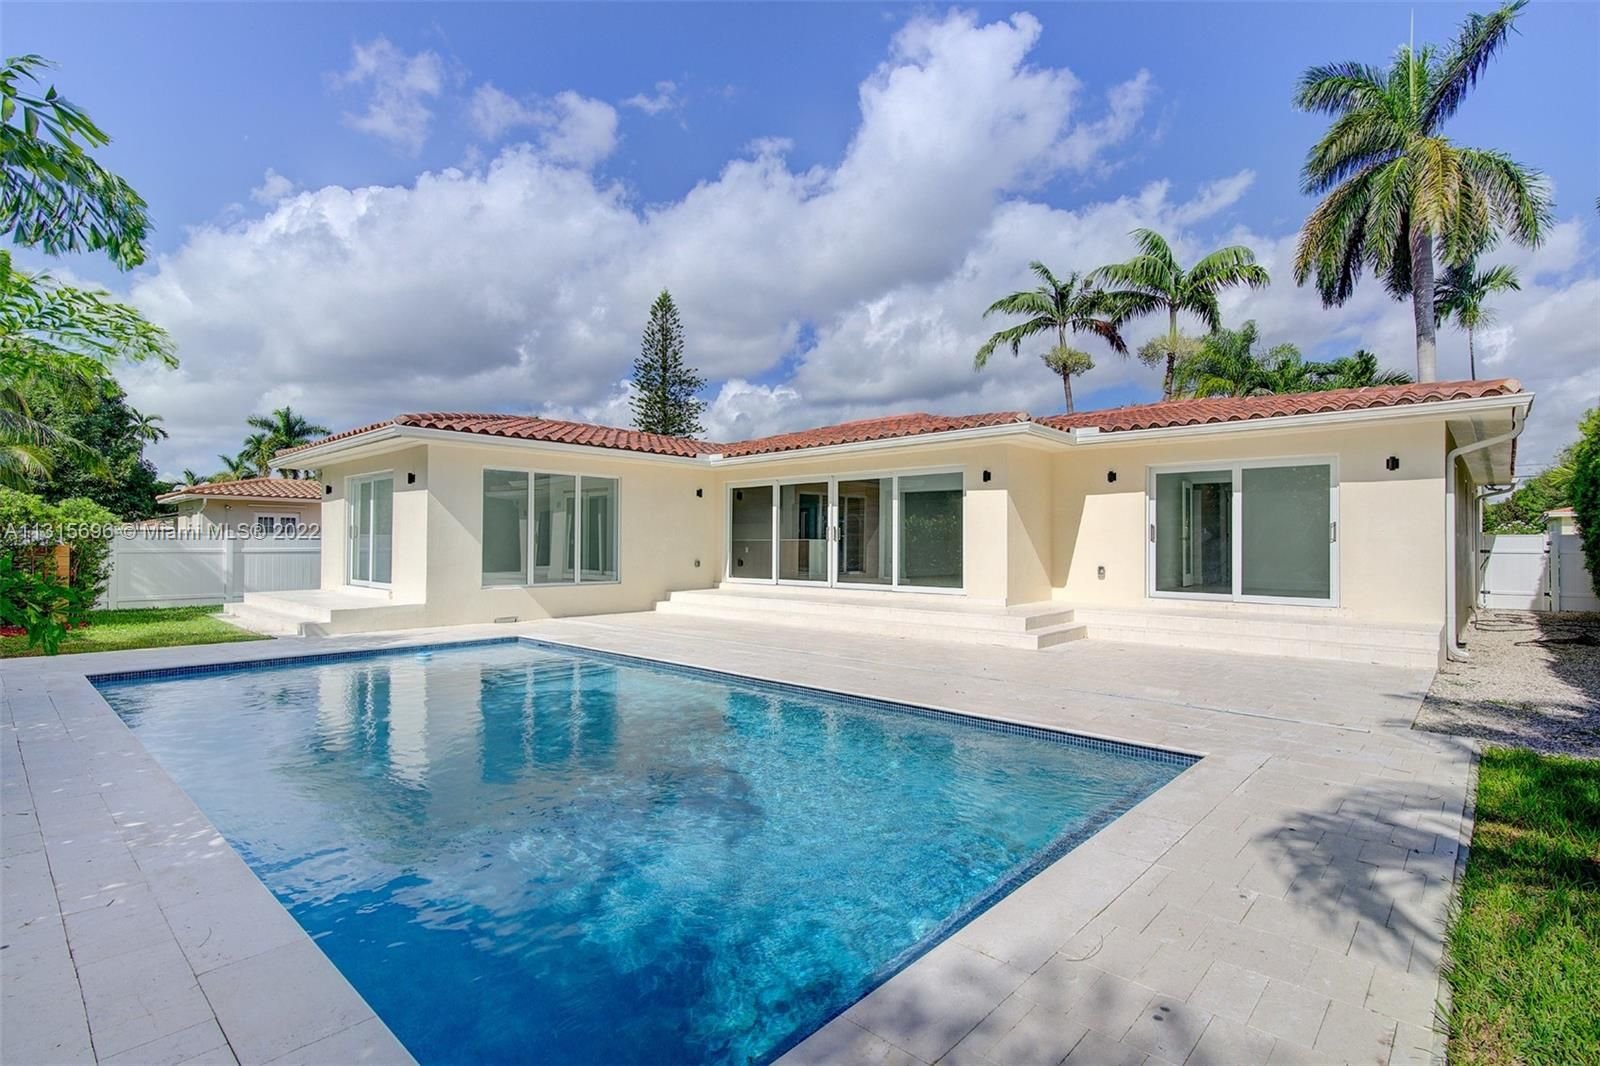 Real estate property located at 1080 104th St, Miami-Dade County, Miami Shores, FL